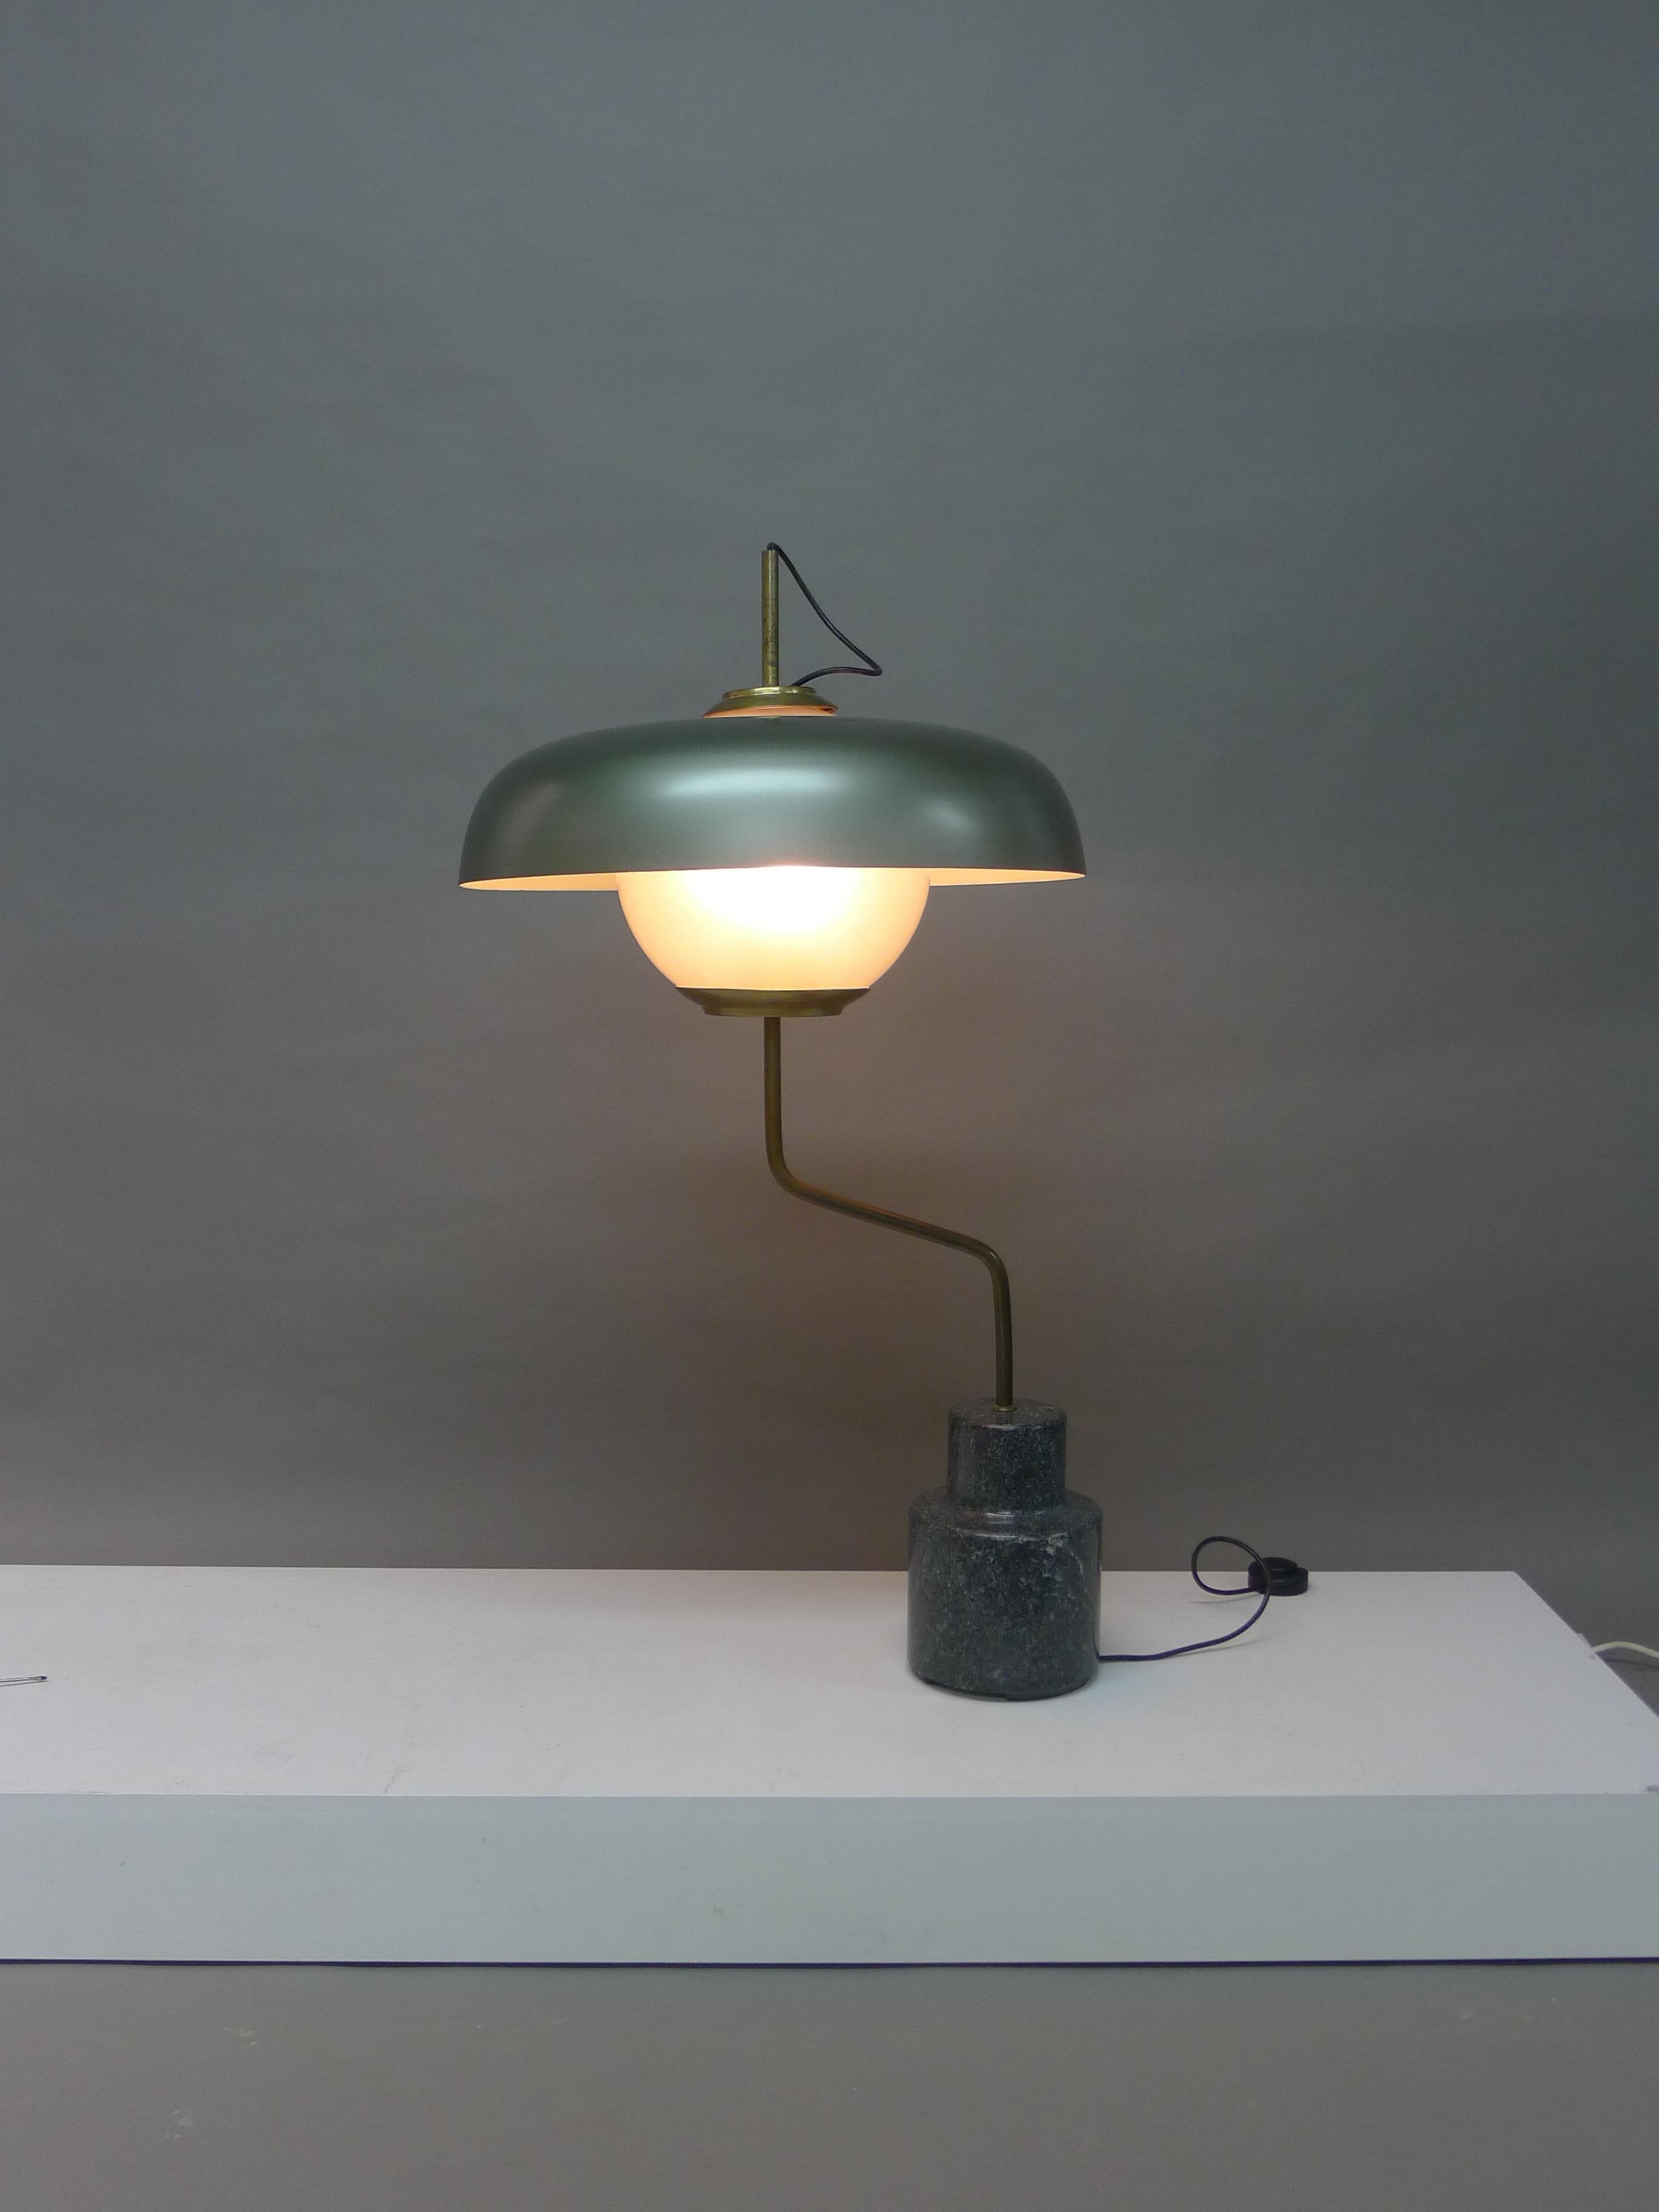 Luigi Caccia Dominioni for Azucena, Italy, 1963. A model Lte 5 Table lamp known as the 